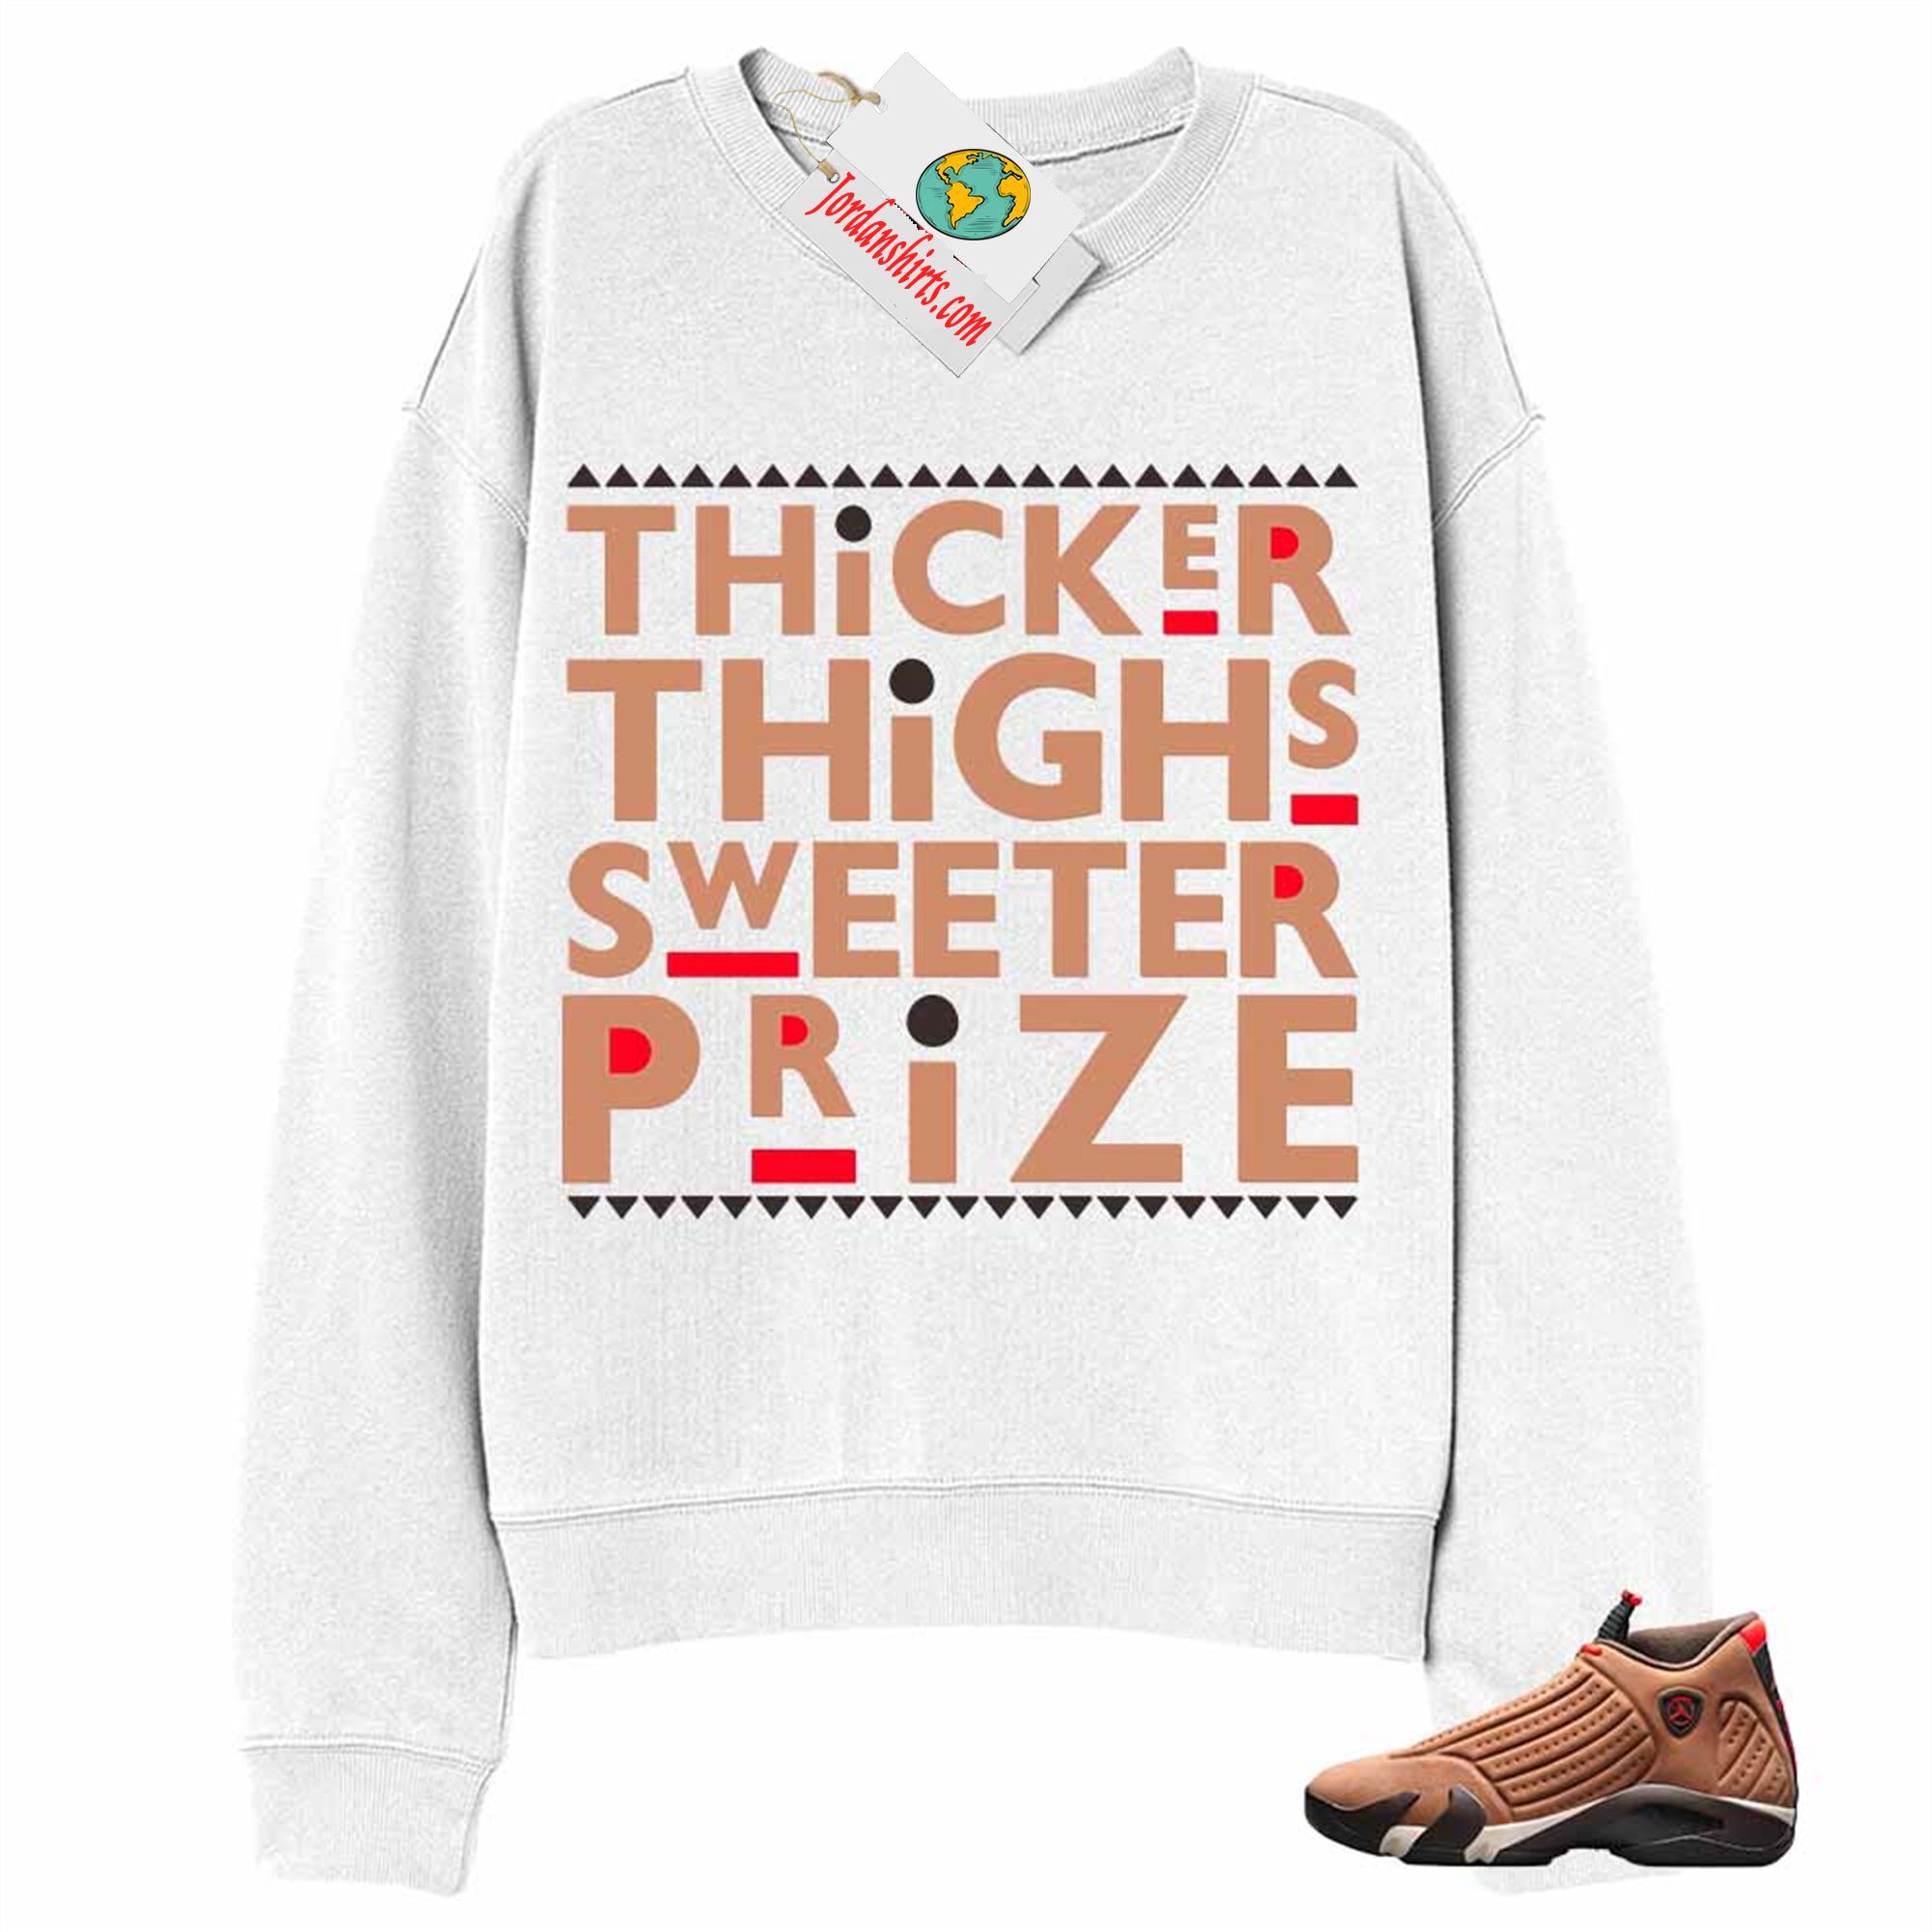 Jordan 14 Sweatshirt, Thicker Thighs Sweeter Prize White Sweatshirt Air Jordan 14 Winterized 14s Size Up To 5xl